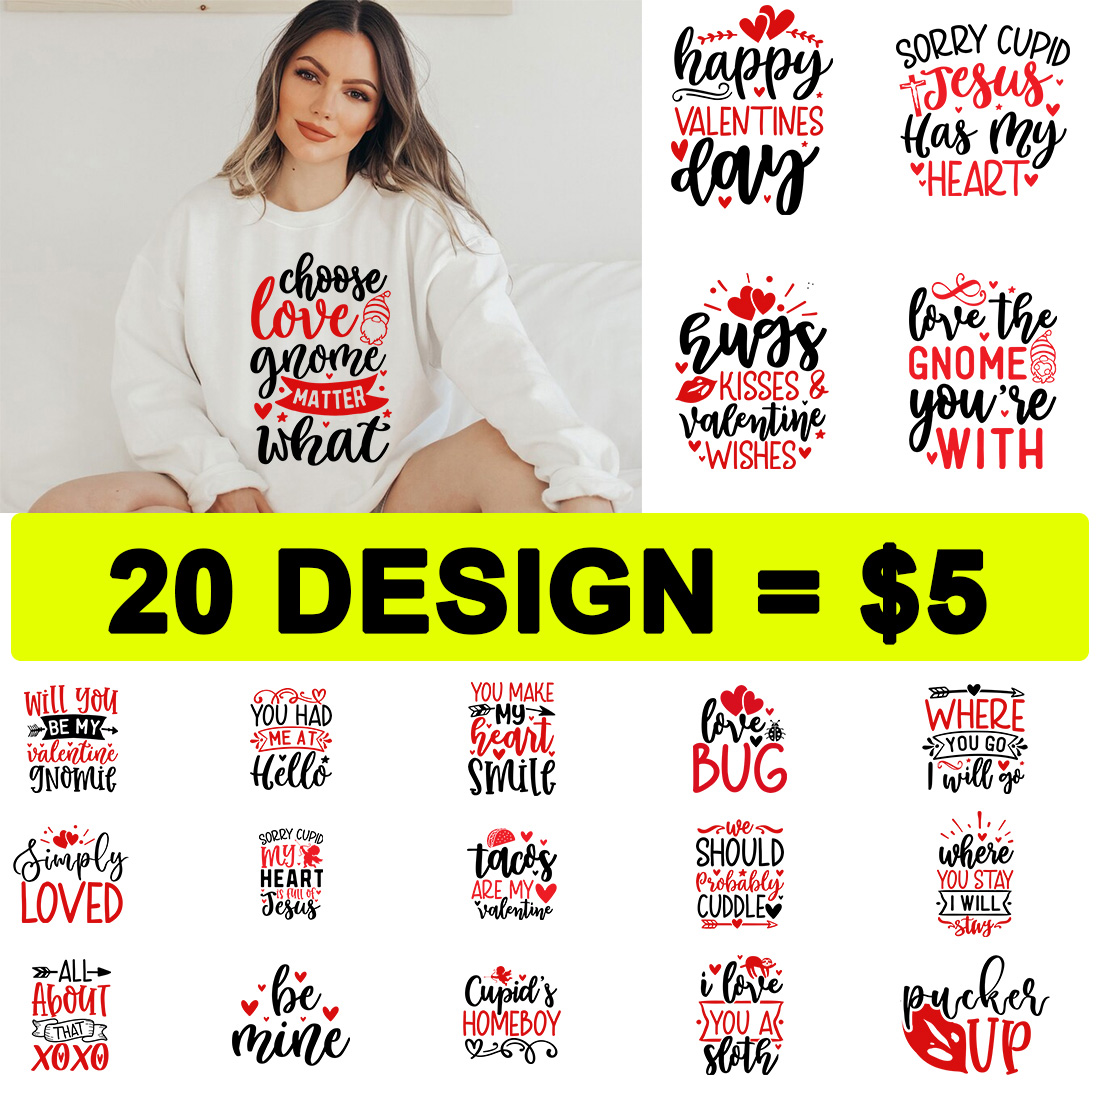 Happy Valentine’s Day SVG Designs Bundle cover image.